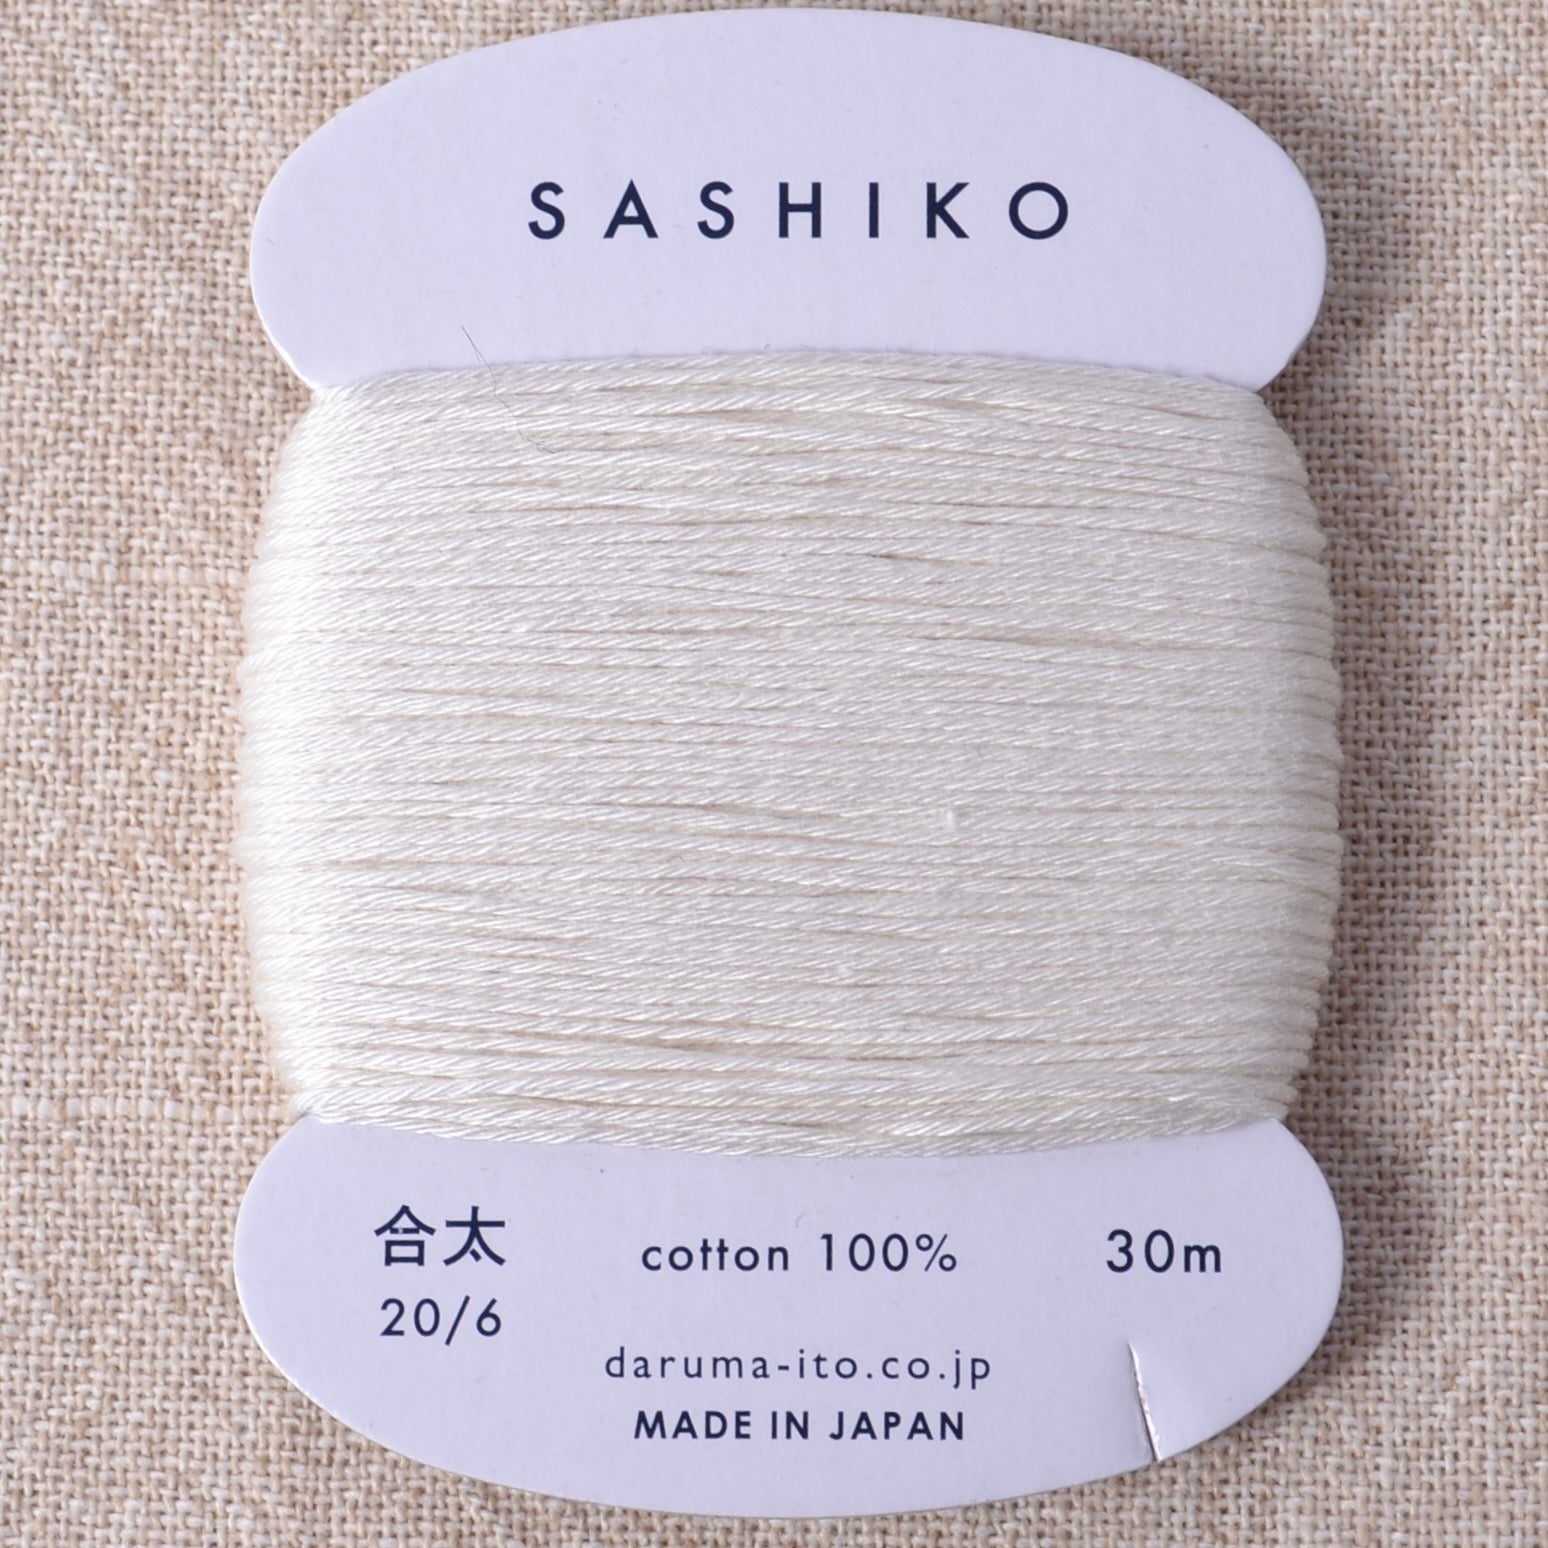 Daruma off white sashiko thread 20/6